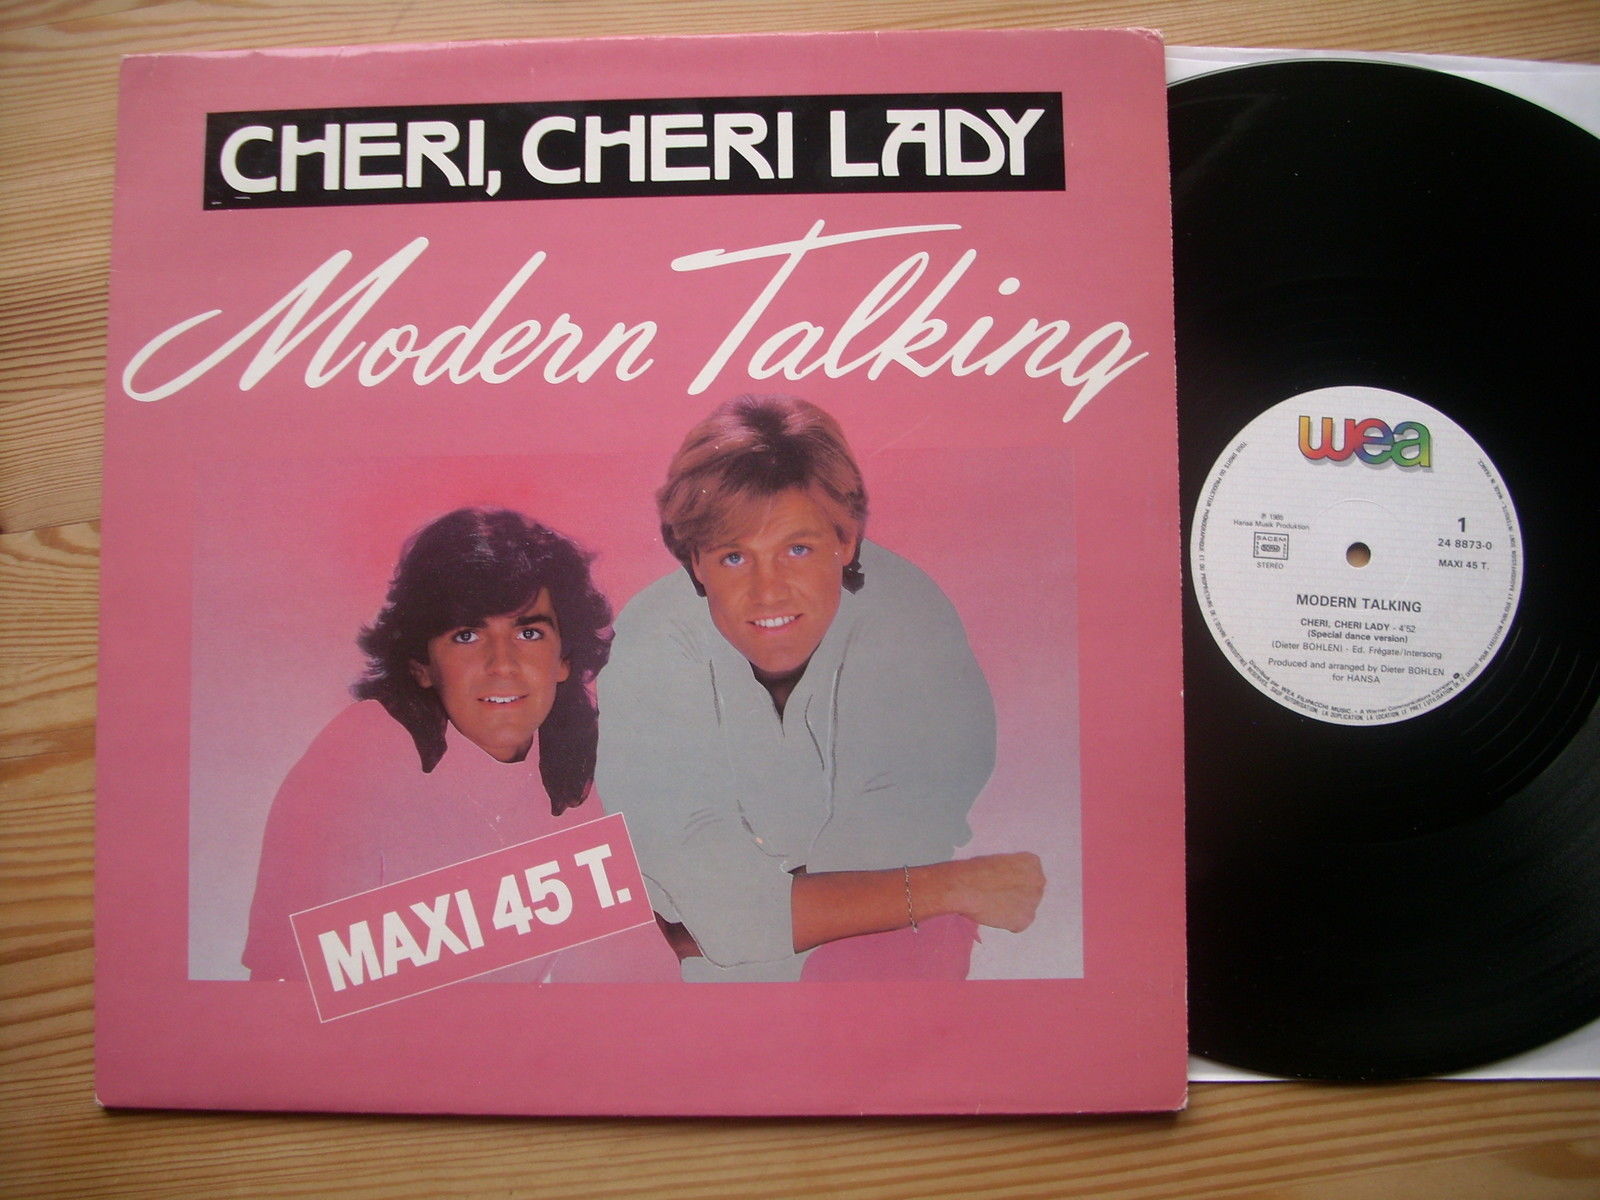 Modern talking - Cheri Cheri Lady пластинка